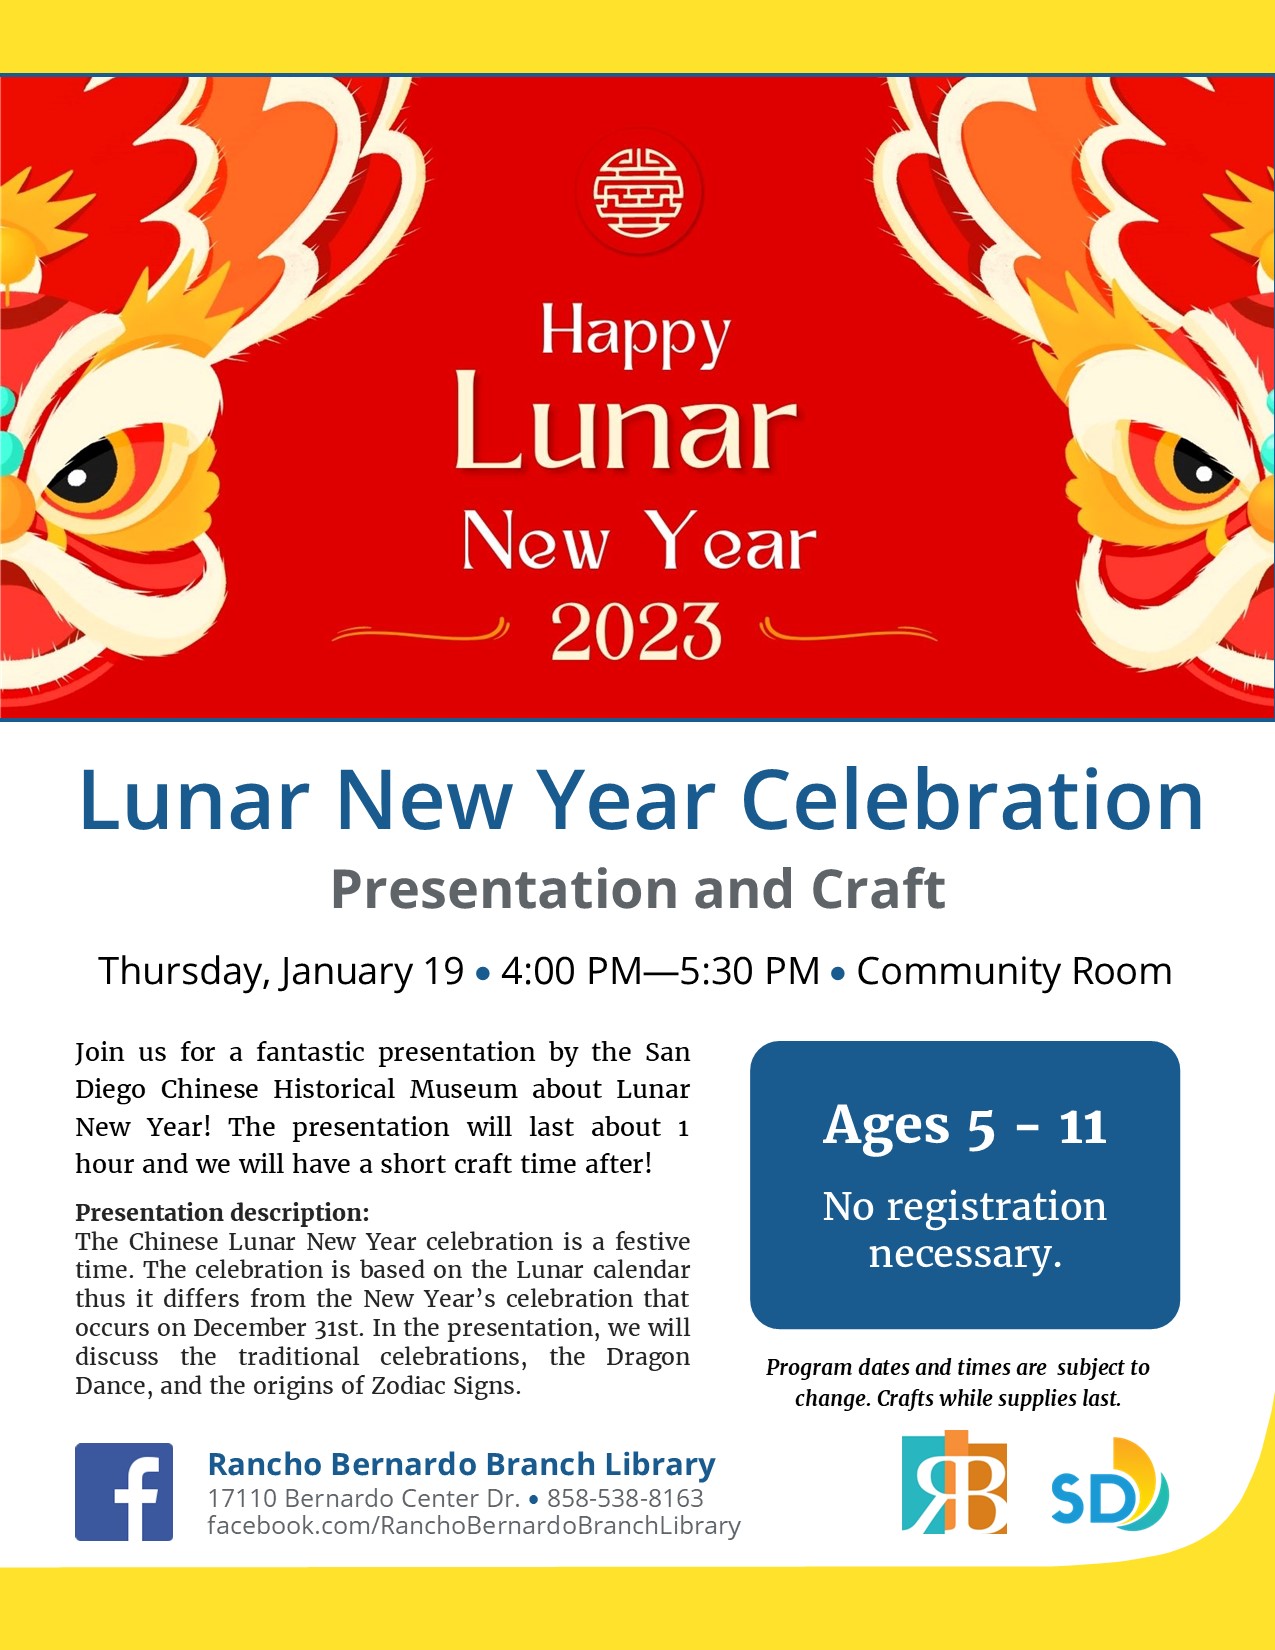 Lunar New Year - 農曆新年慶祝活動- Public Library of Brookline